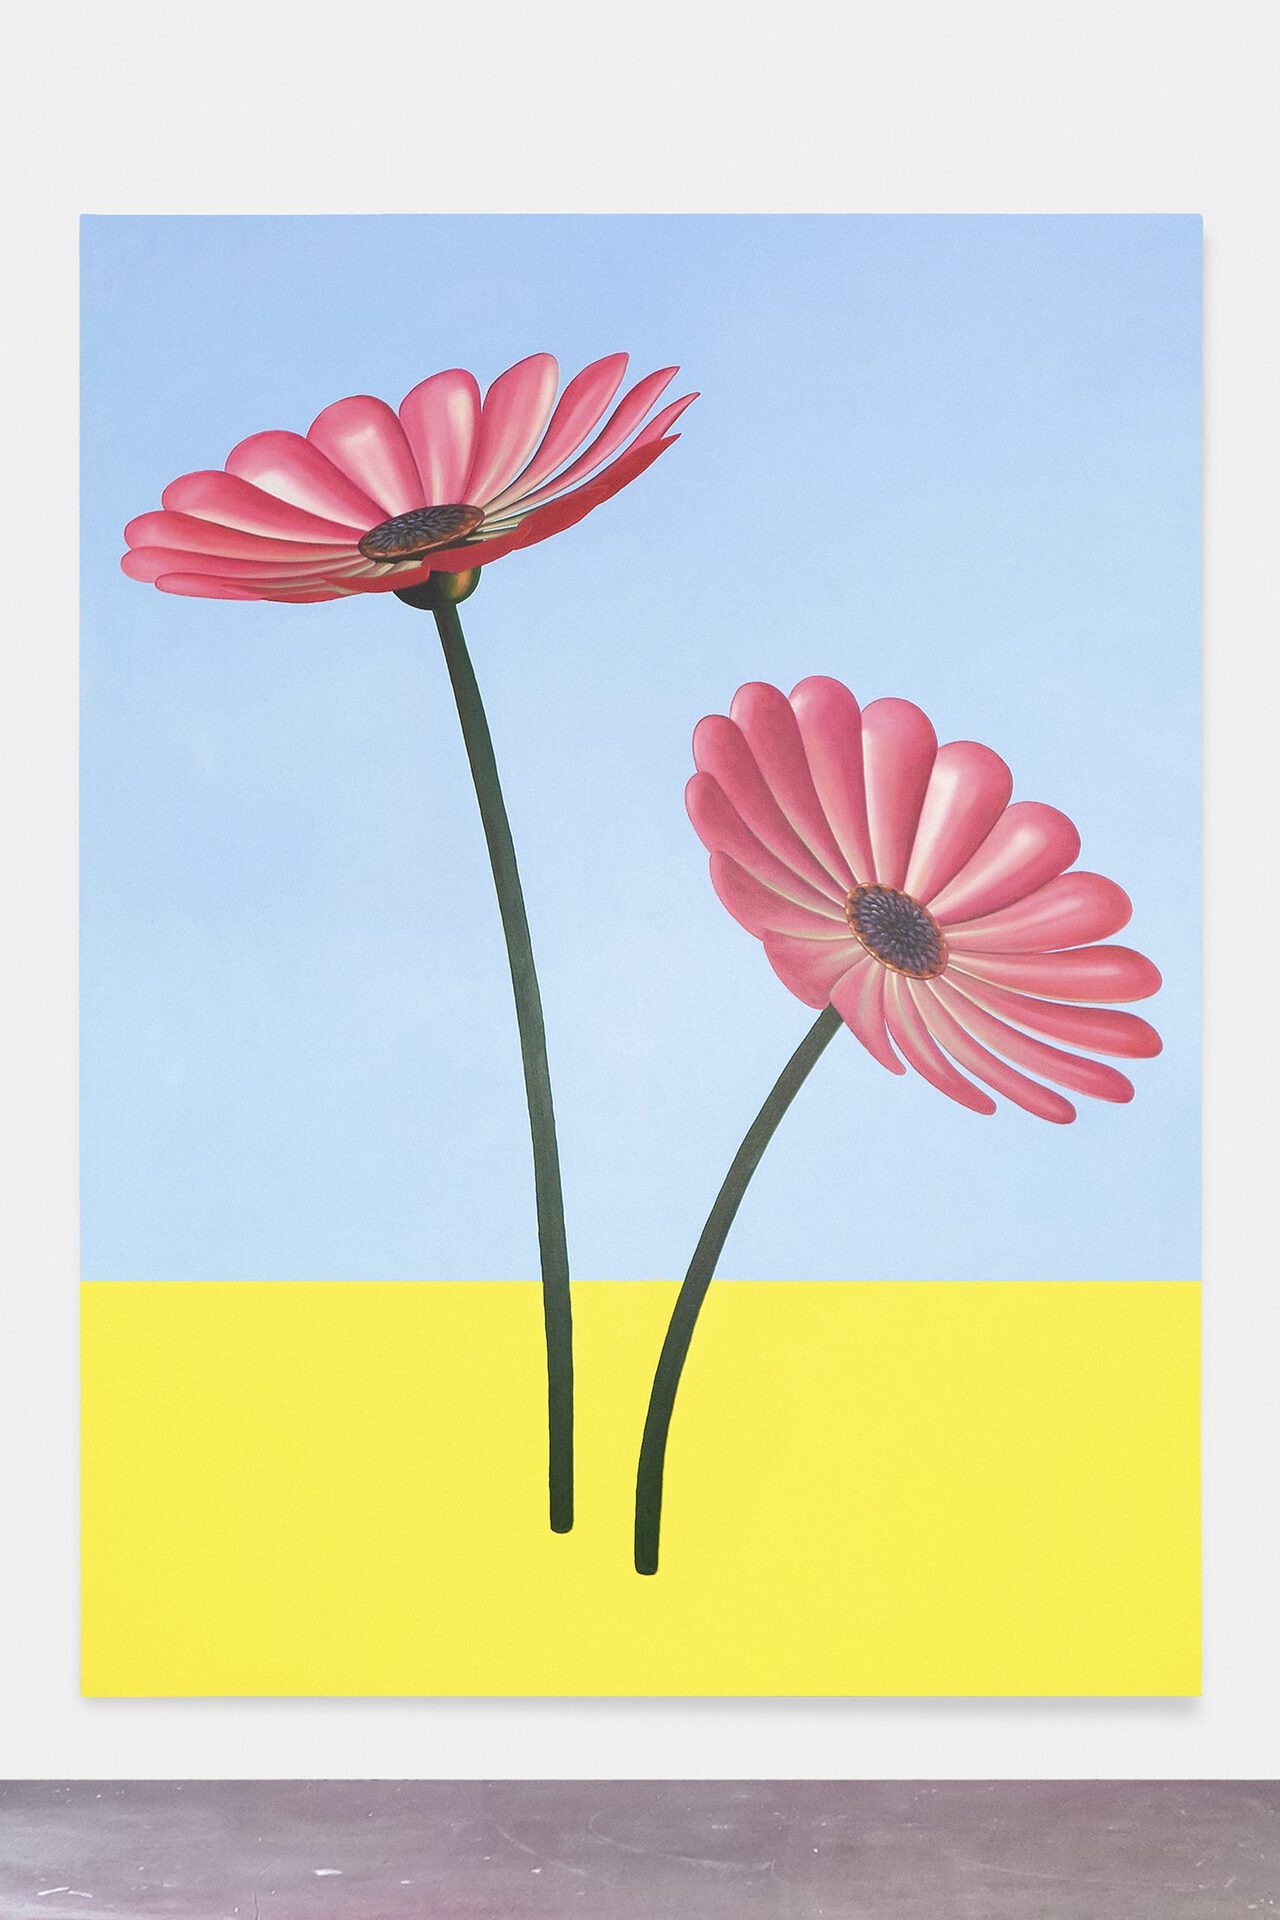 Marius Steiger, I feel Love, 2021, Oil on canvas, 240 × 180 cm